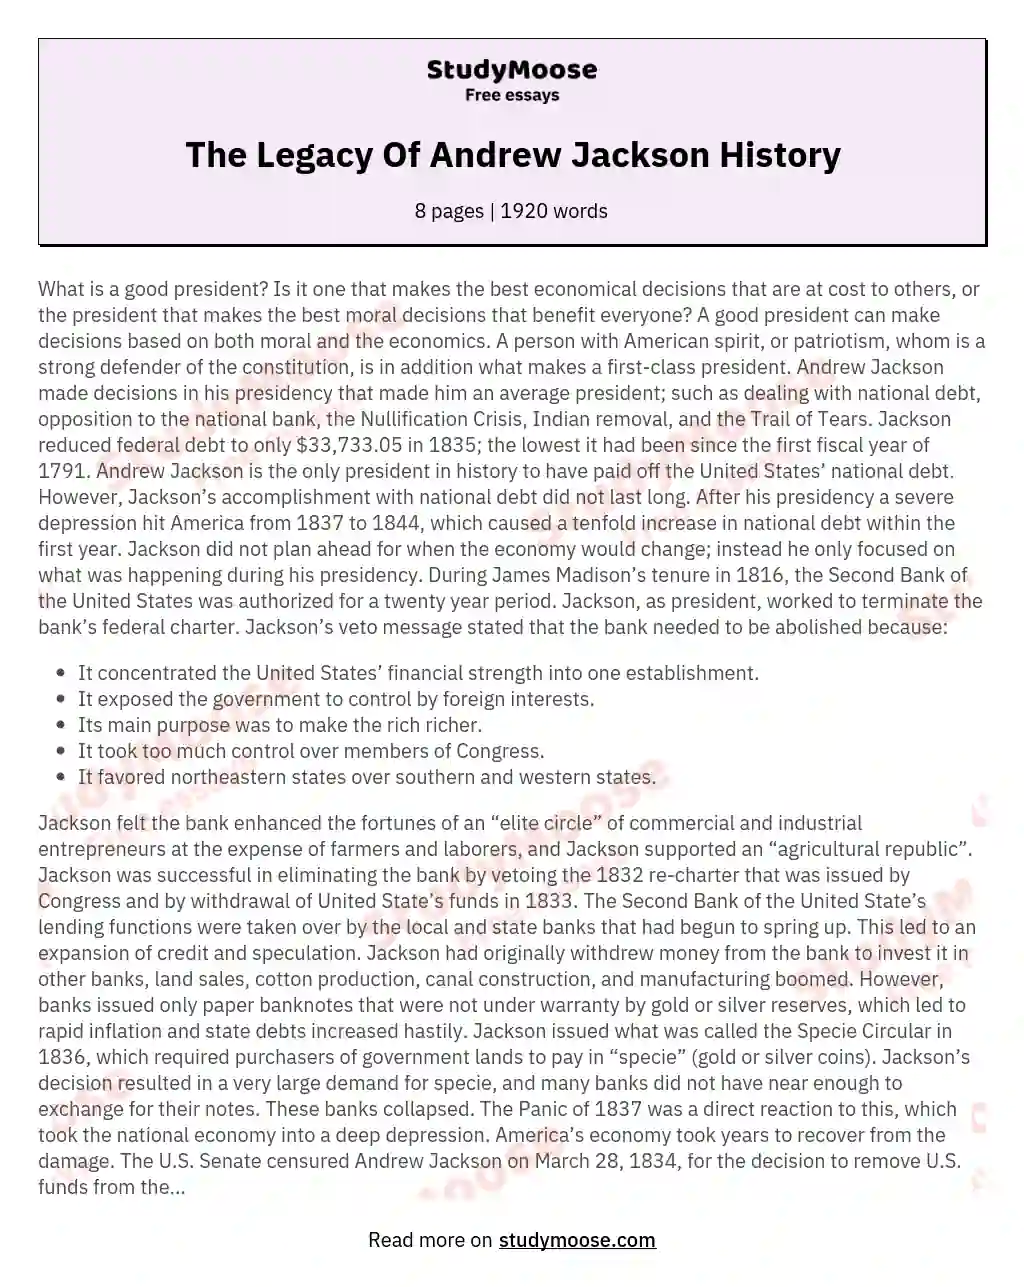 The Legacy Of Andrew Jackson History essay